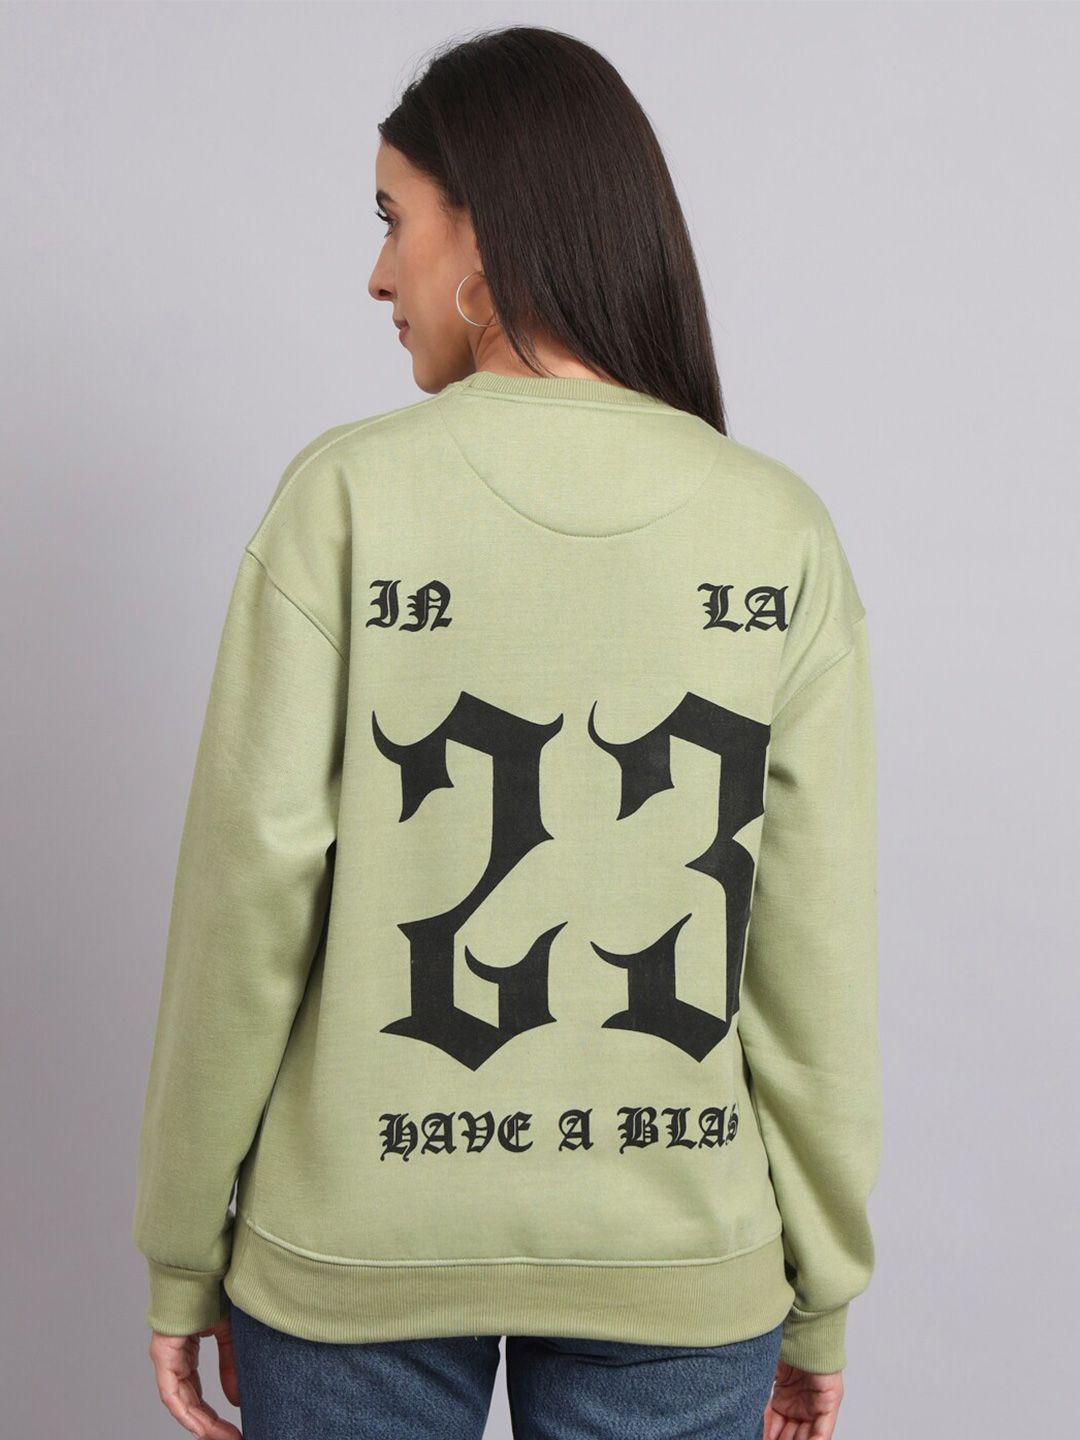 obaan typography printed cotton pullover sweatshirt